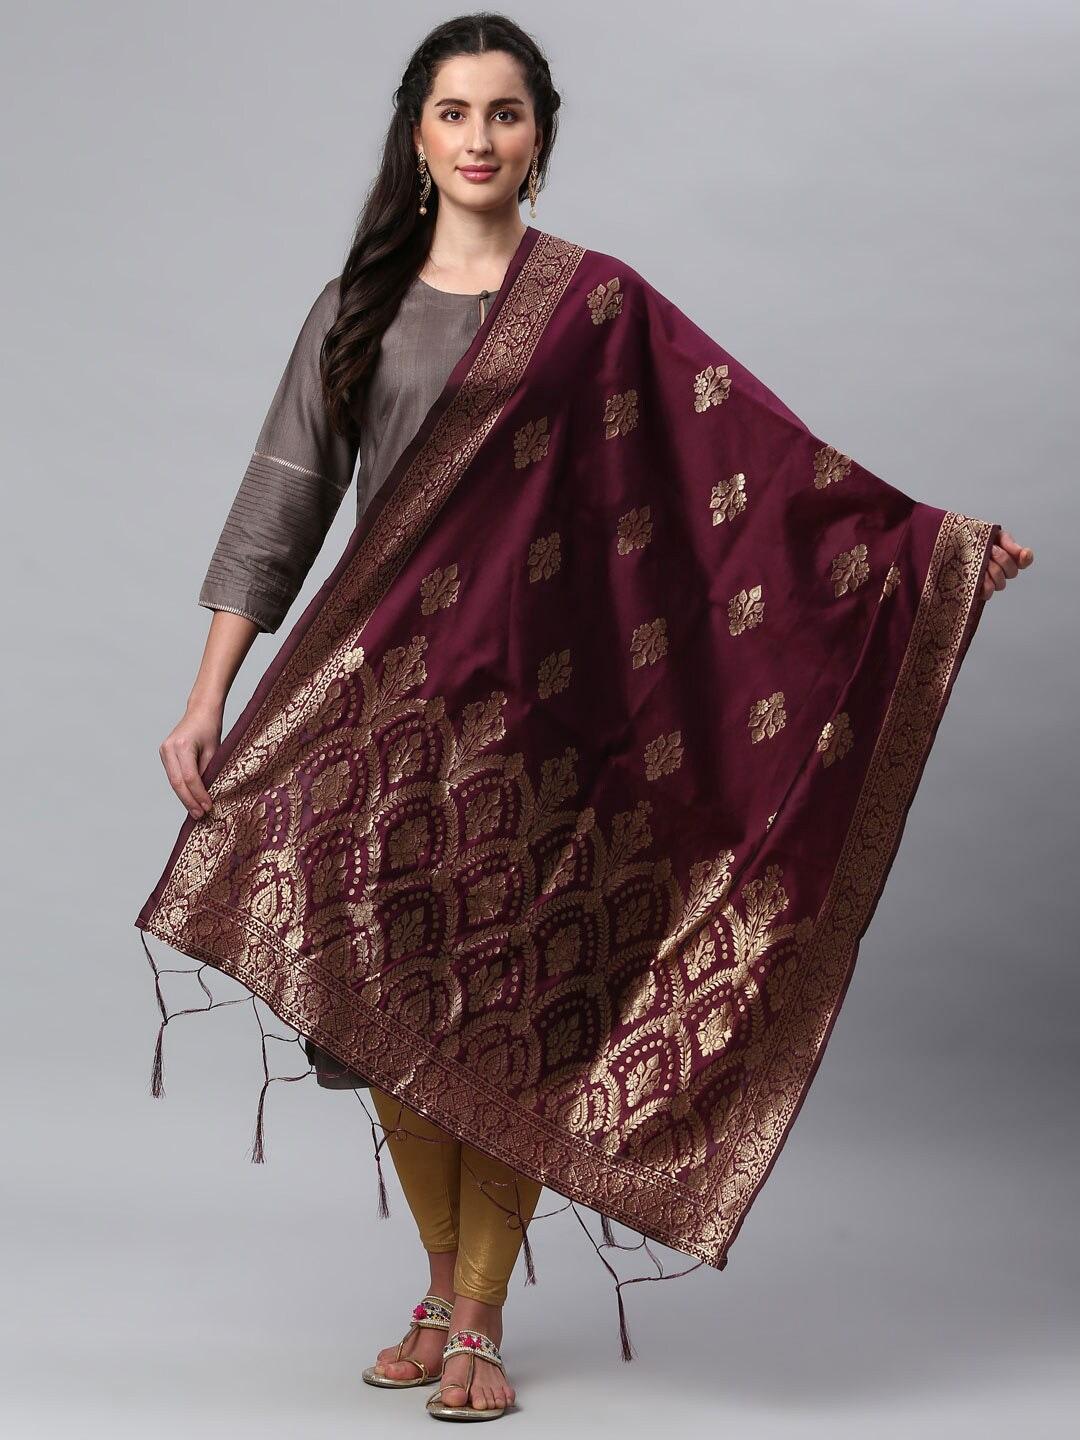 lilots-violet-&-gold-toned-ethnic-motifs-woven-design-dupatta-with-zari